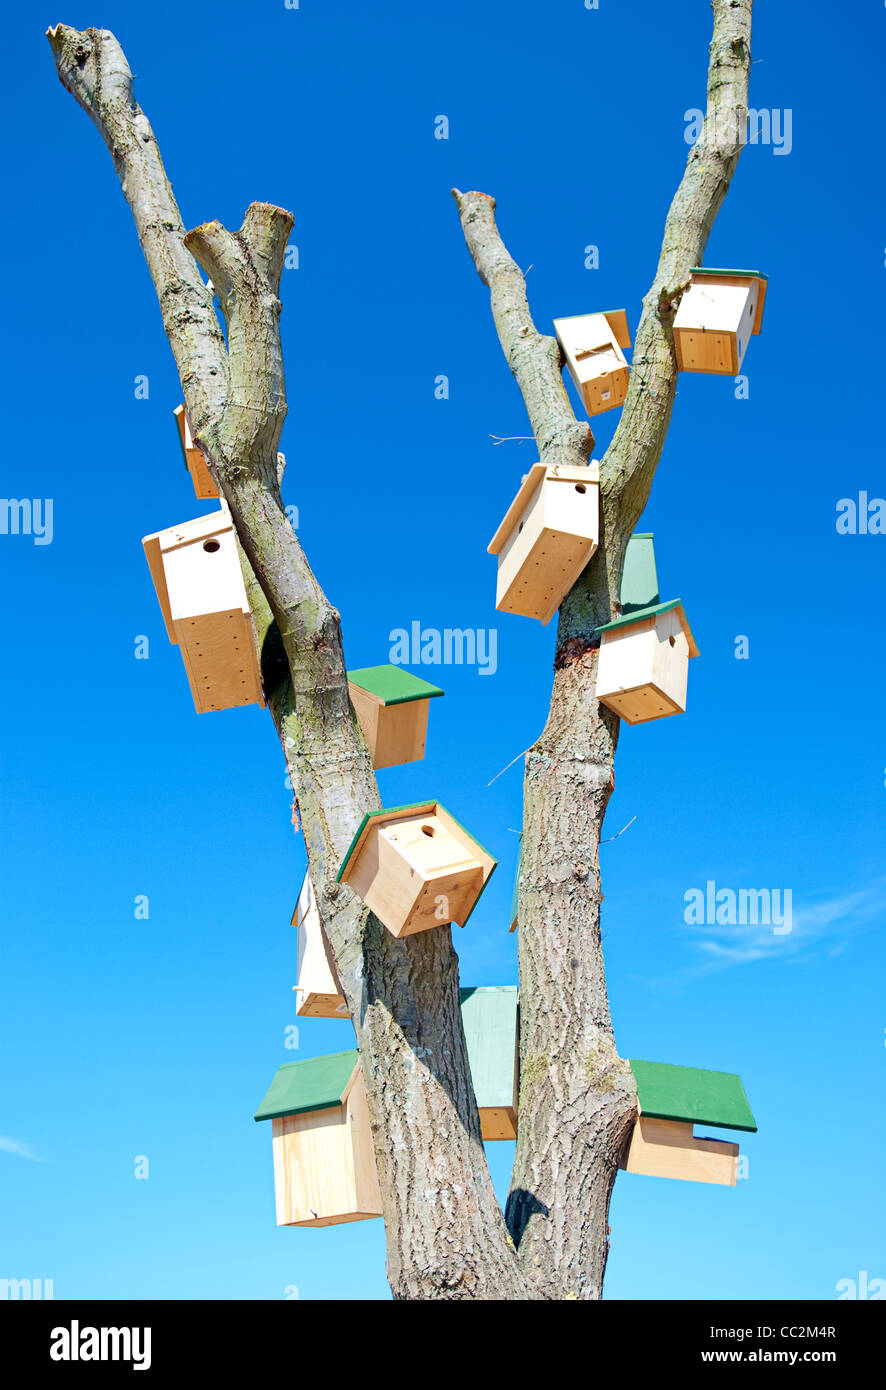 Tree with multiple bird houses Stock Photo